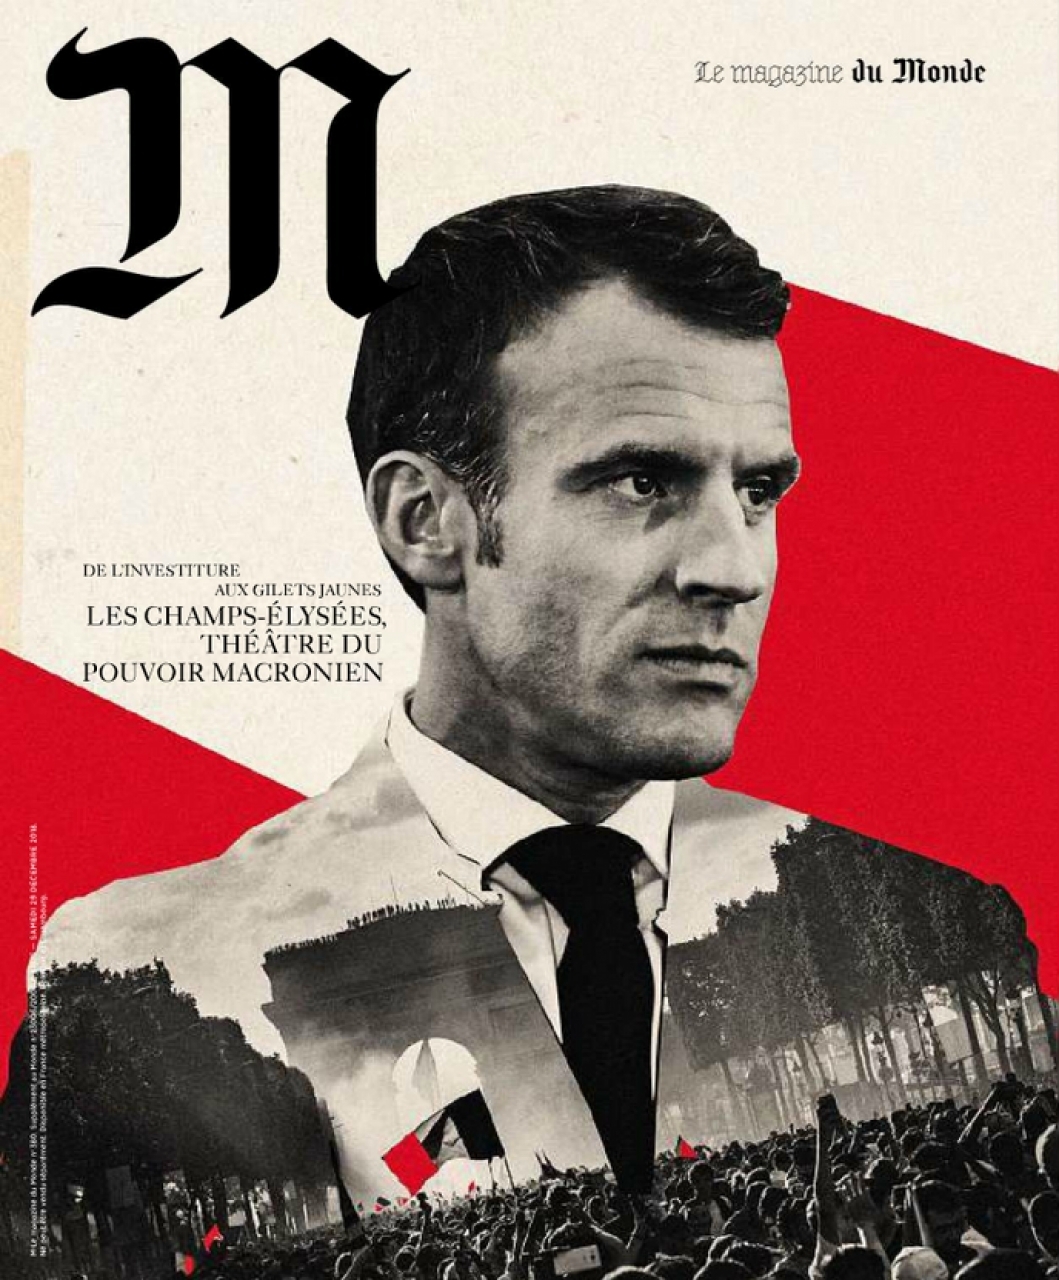 La copertina con Macron ricorda Hitler, Le Monde chiede scusa - Ticinonline